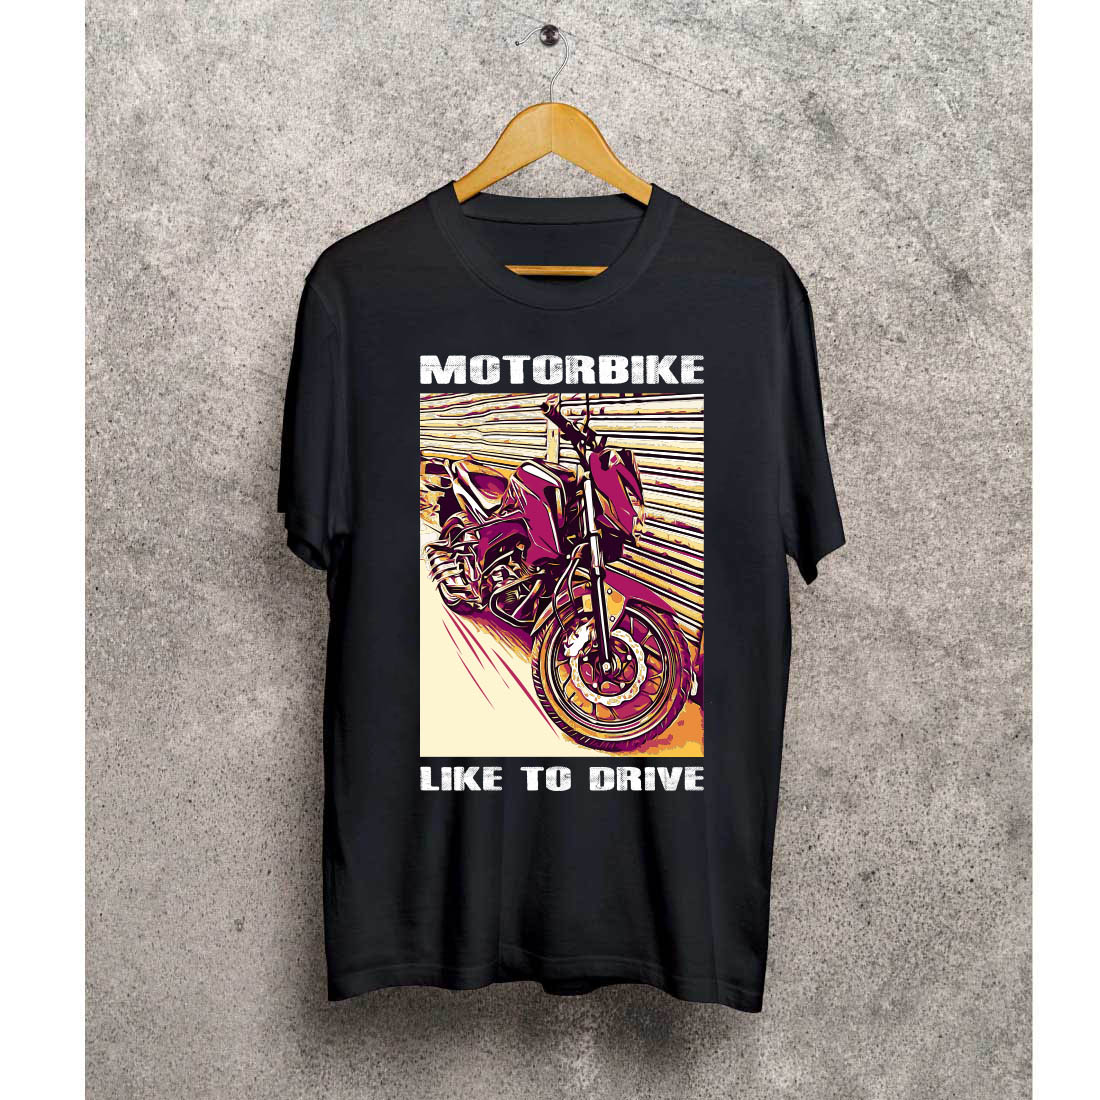 Motorbike / Motorcycle T-shirt Design cover image.